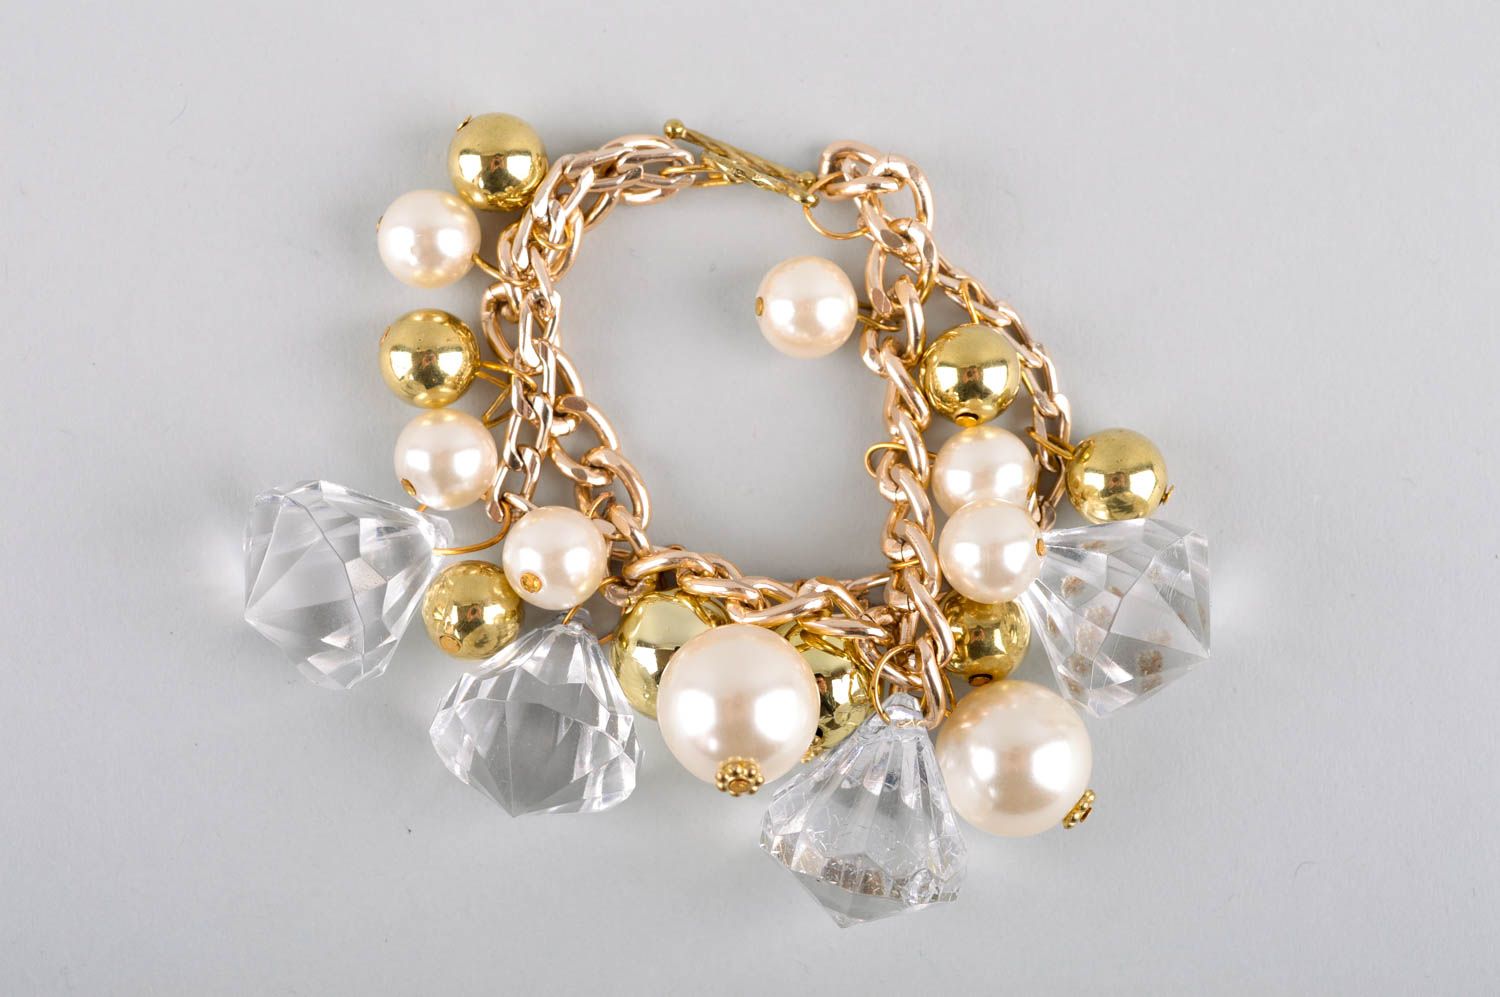 Handmade beautiful bracelet elite cute jewelry stylish lovely accessories photo 2